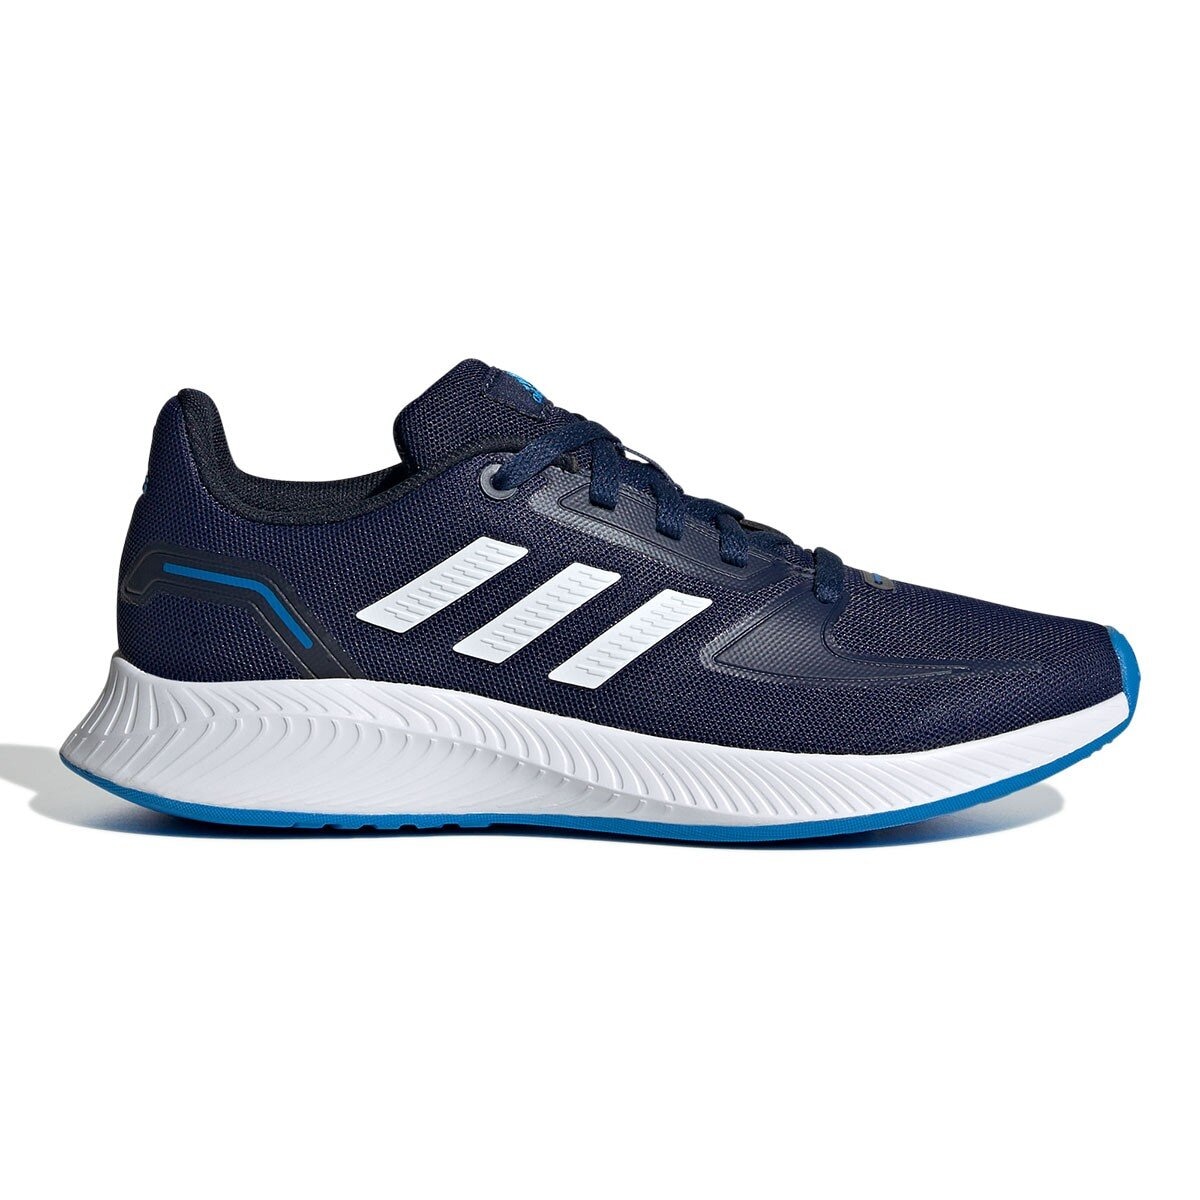 Adidas 兒童運動鞋 深藍